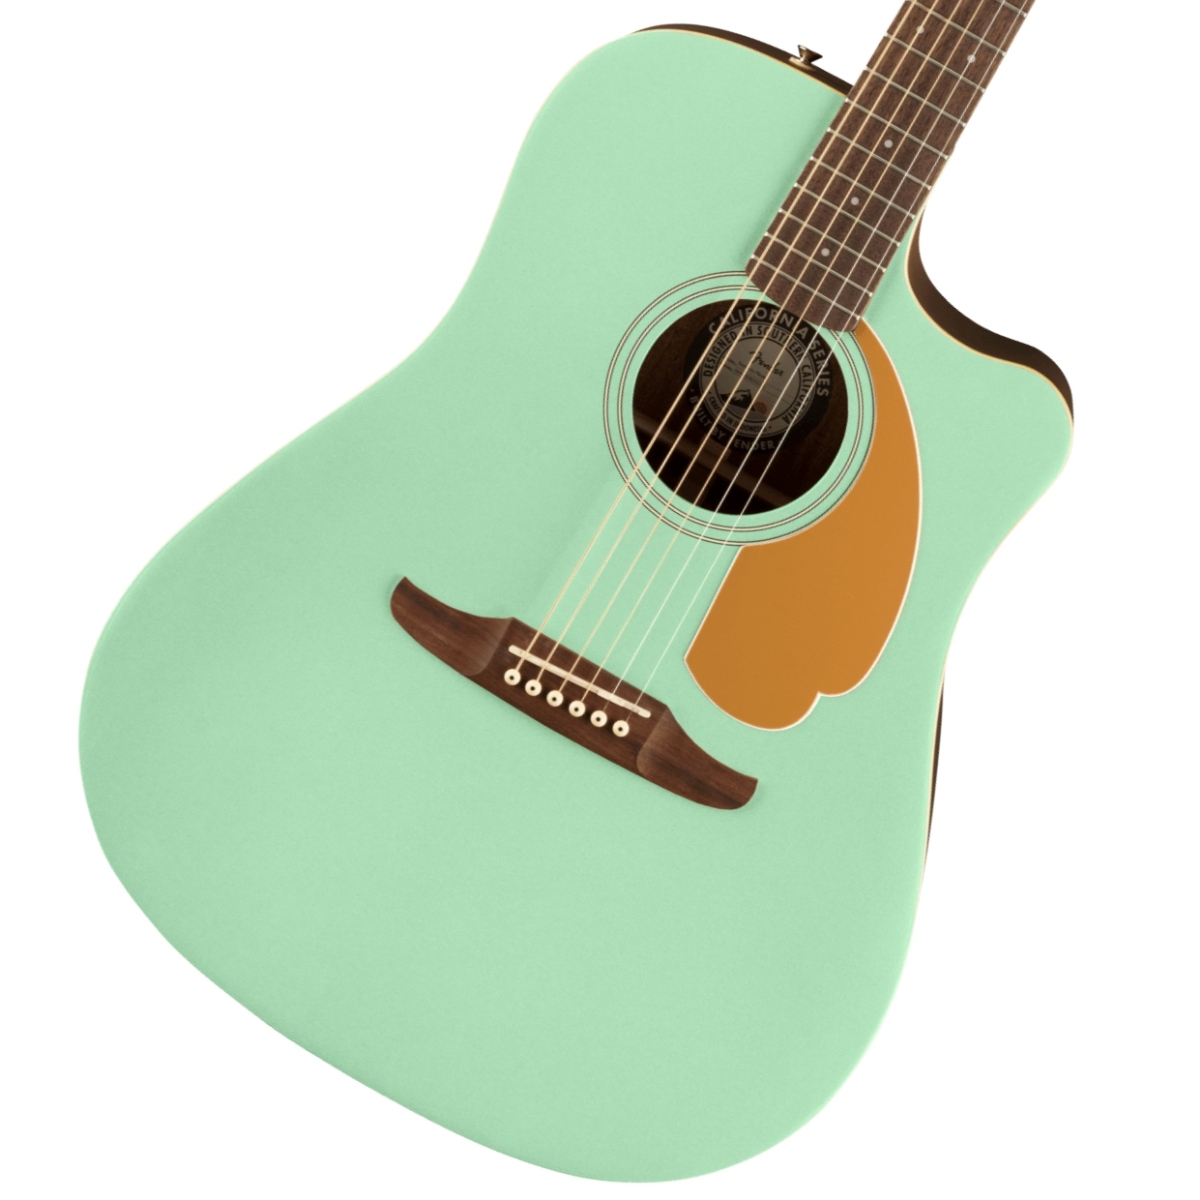 《FENDERアコギ爆安特価》 Fender Acoustic / FSR Redondo Player Walnut Fingerboard  Surf Green アコギ エレアコ [限定カラー]